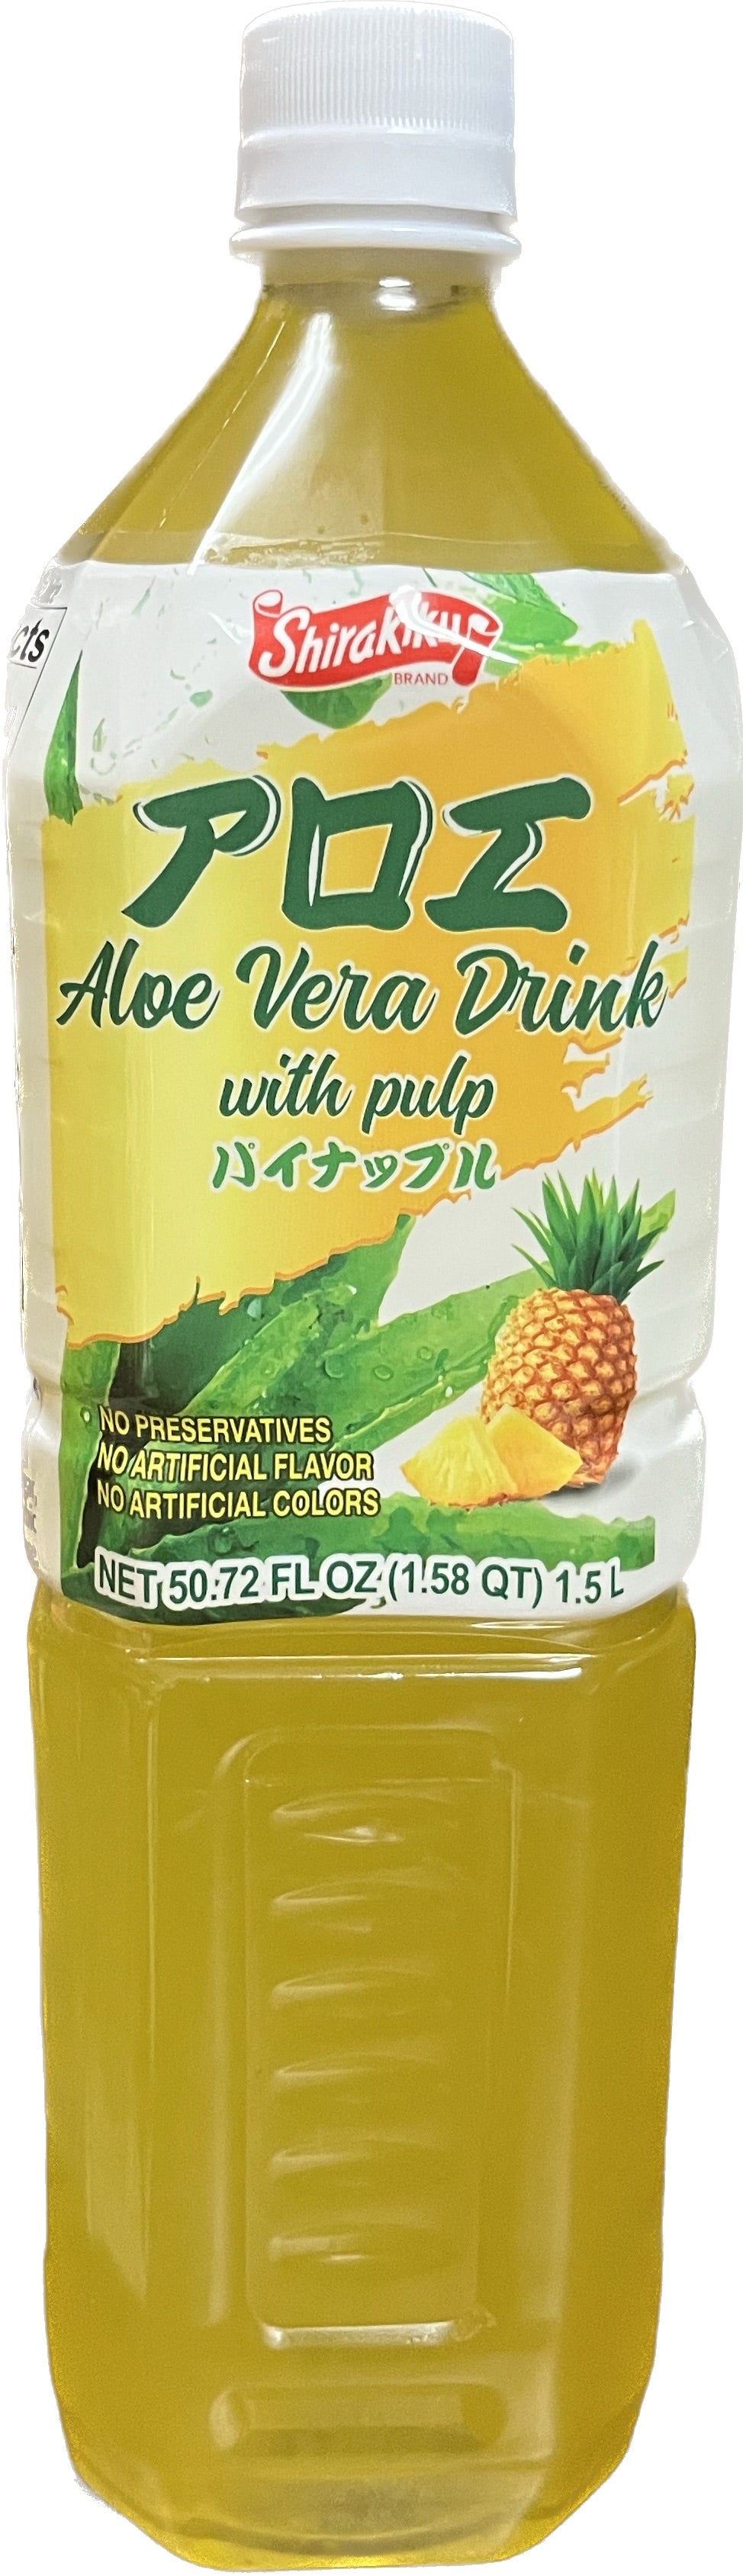 Shirakiku Pineapple Aloe Vera Drink with pulp - 1.5L - 0